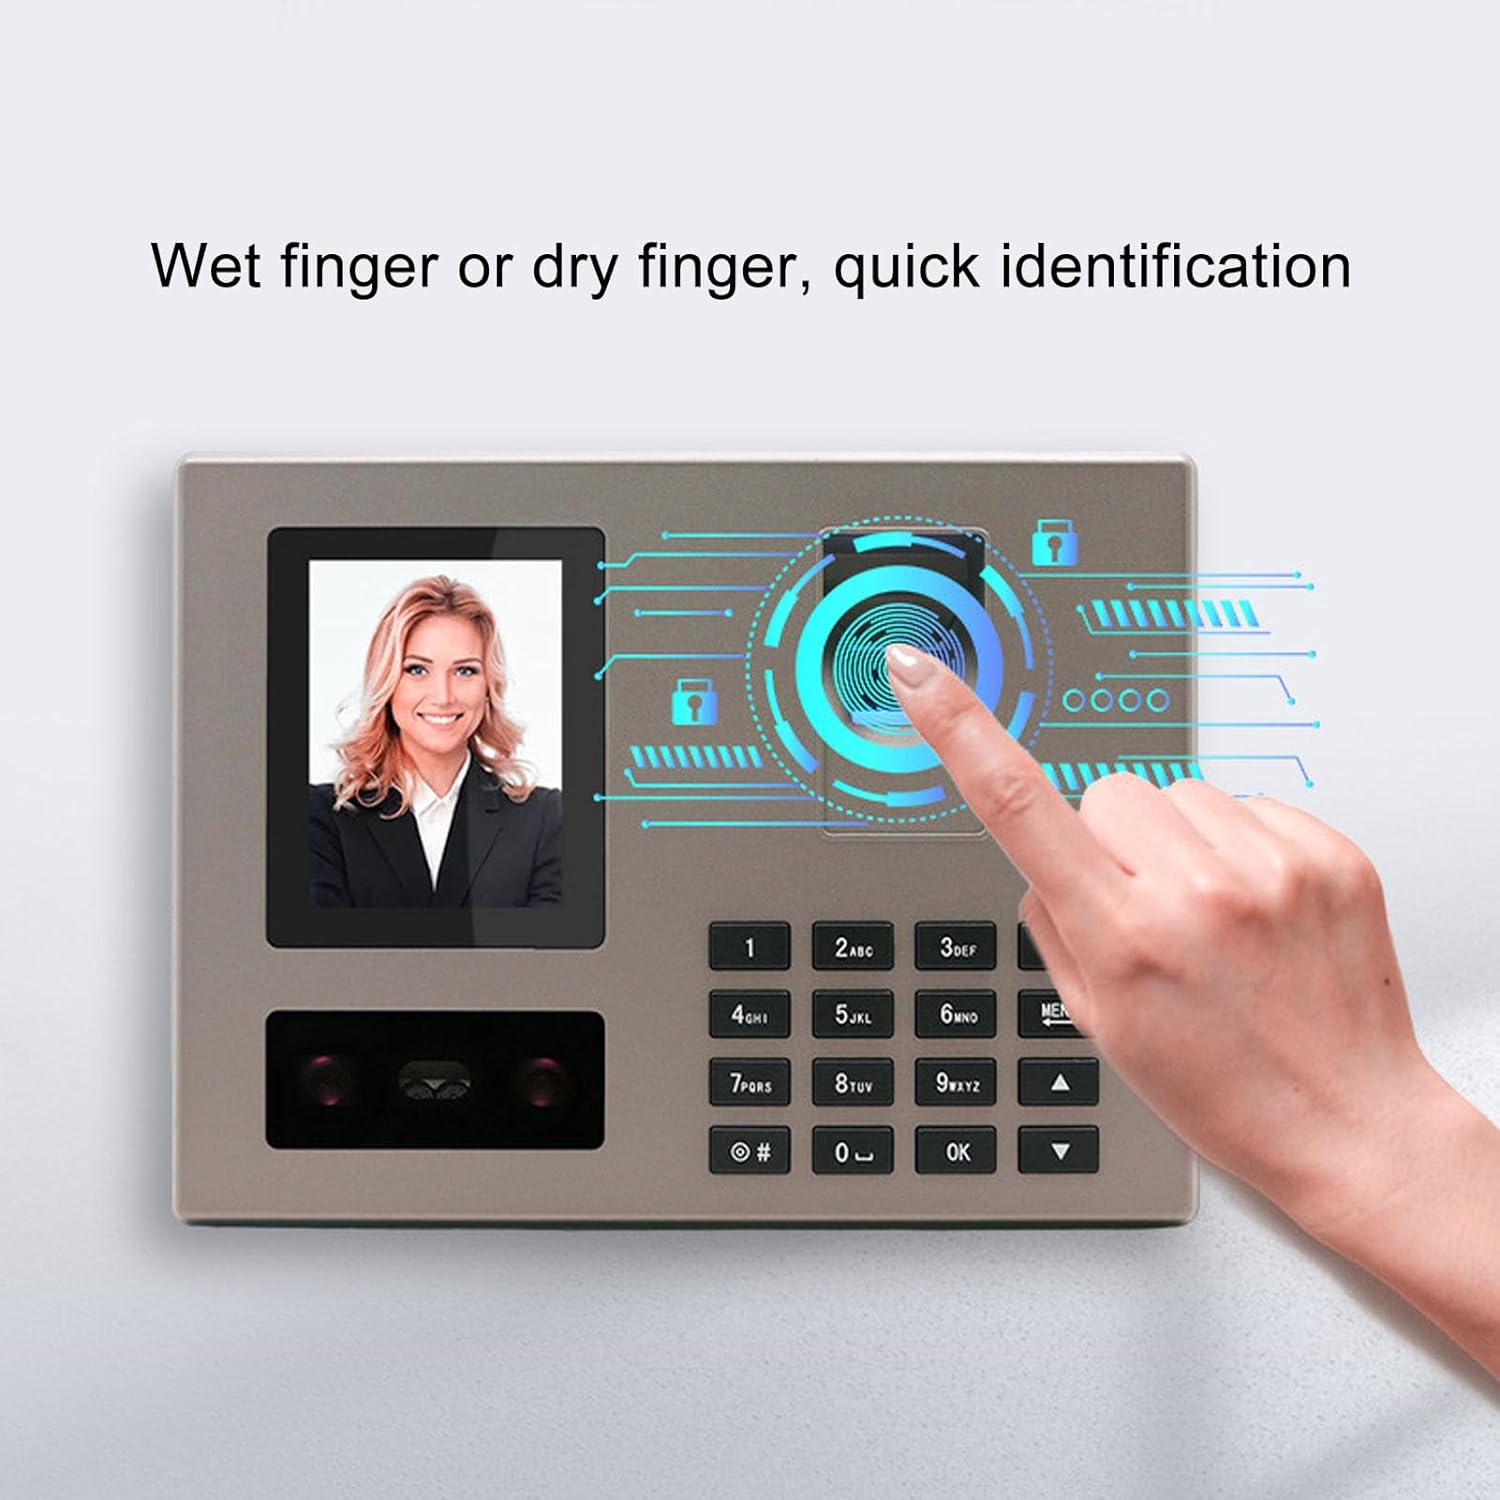 Biometric Proximity Clock with Fingerprint, Employee Time Clocks, Small Business PIN Punching (US Plug)